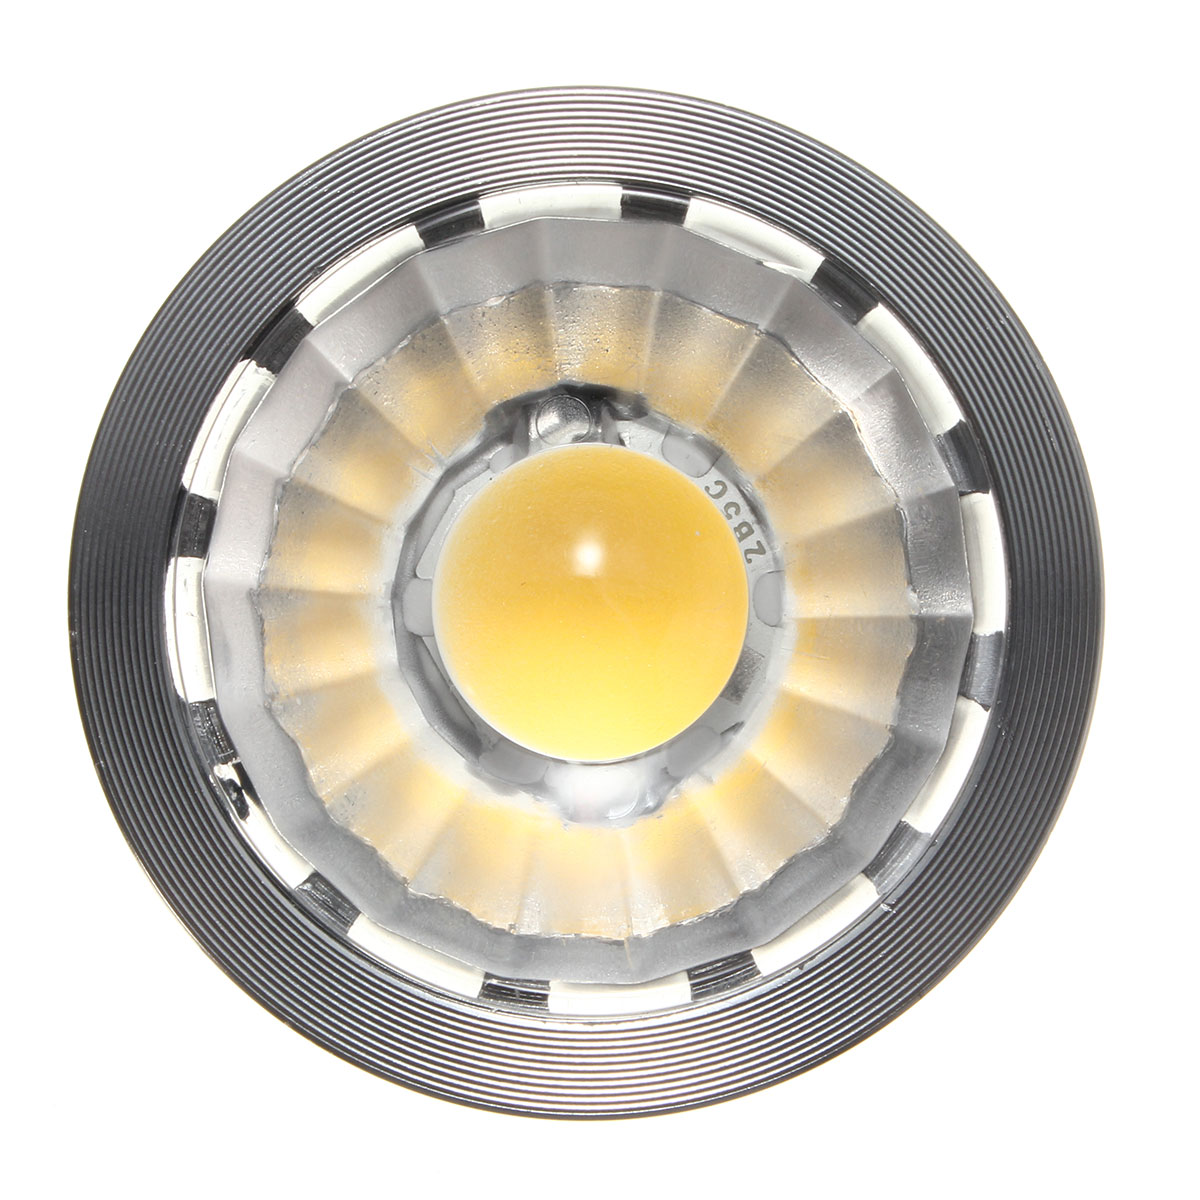 Dimmable-MR16-5W-LED-COB-Spotlight-Light-Bulb-for-Home-Office-Kitchen-DC12V-1424983-7